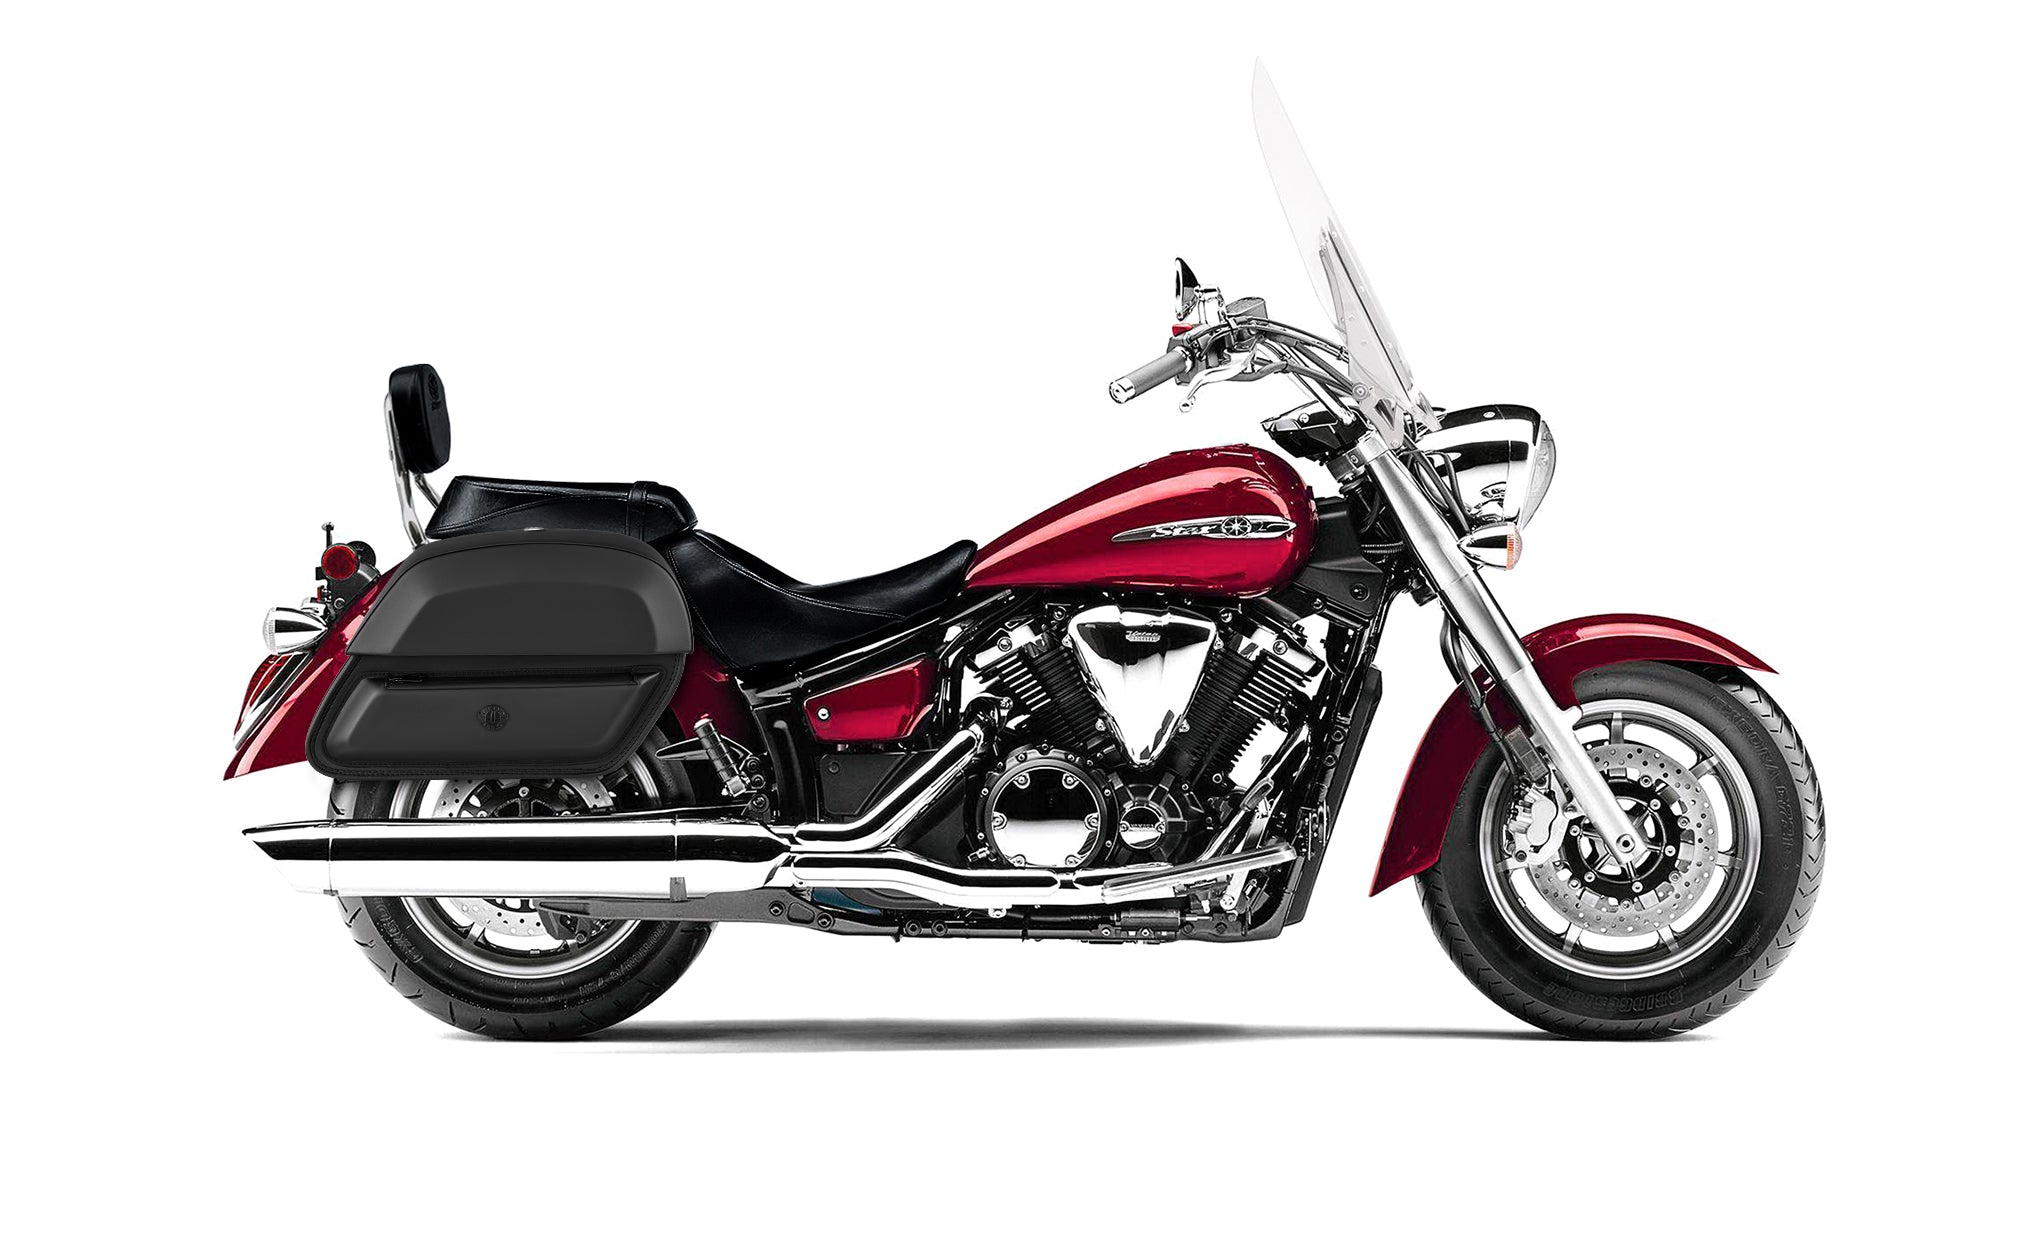 28L - Wraith Medium Yamaha V Star 1300 Tourer Leather Motorcycle Saddlebags BAG on Bike View @expand